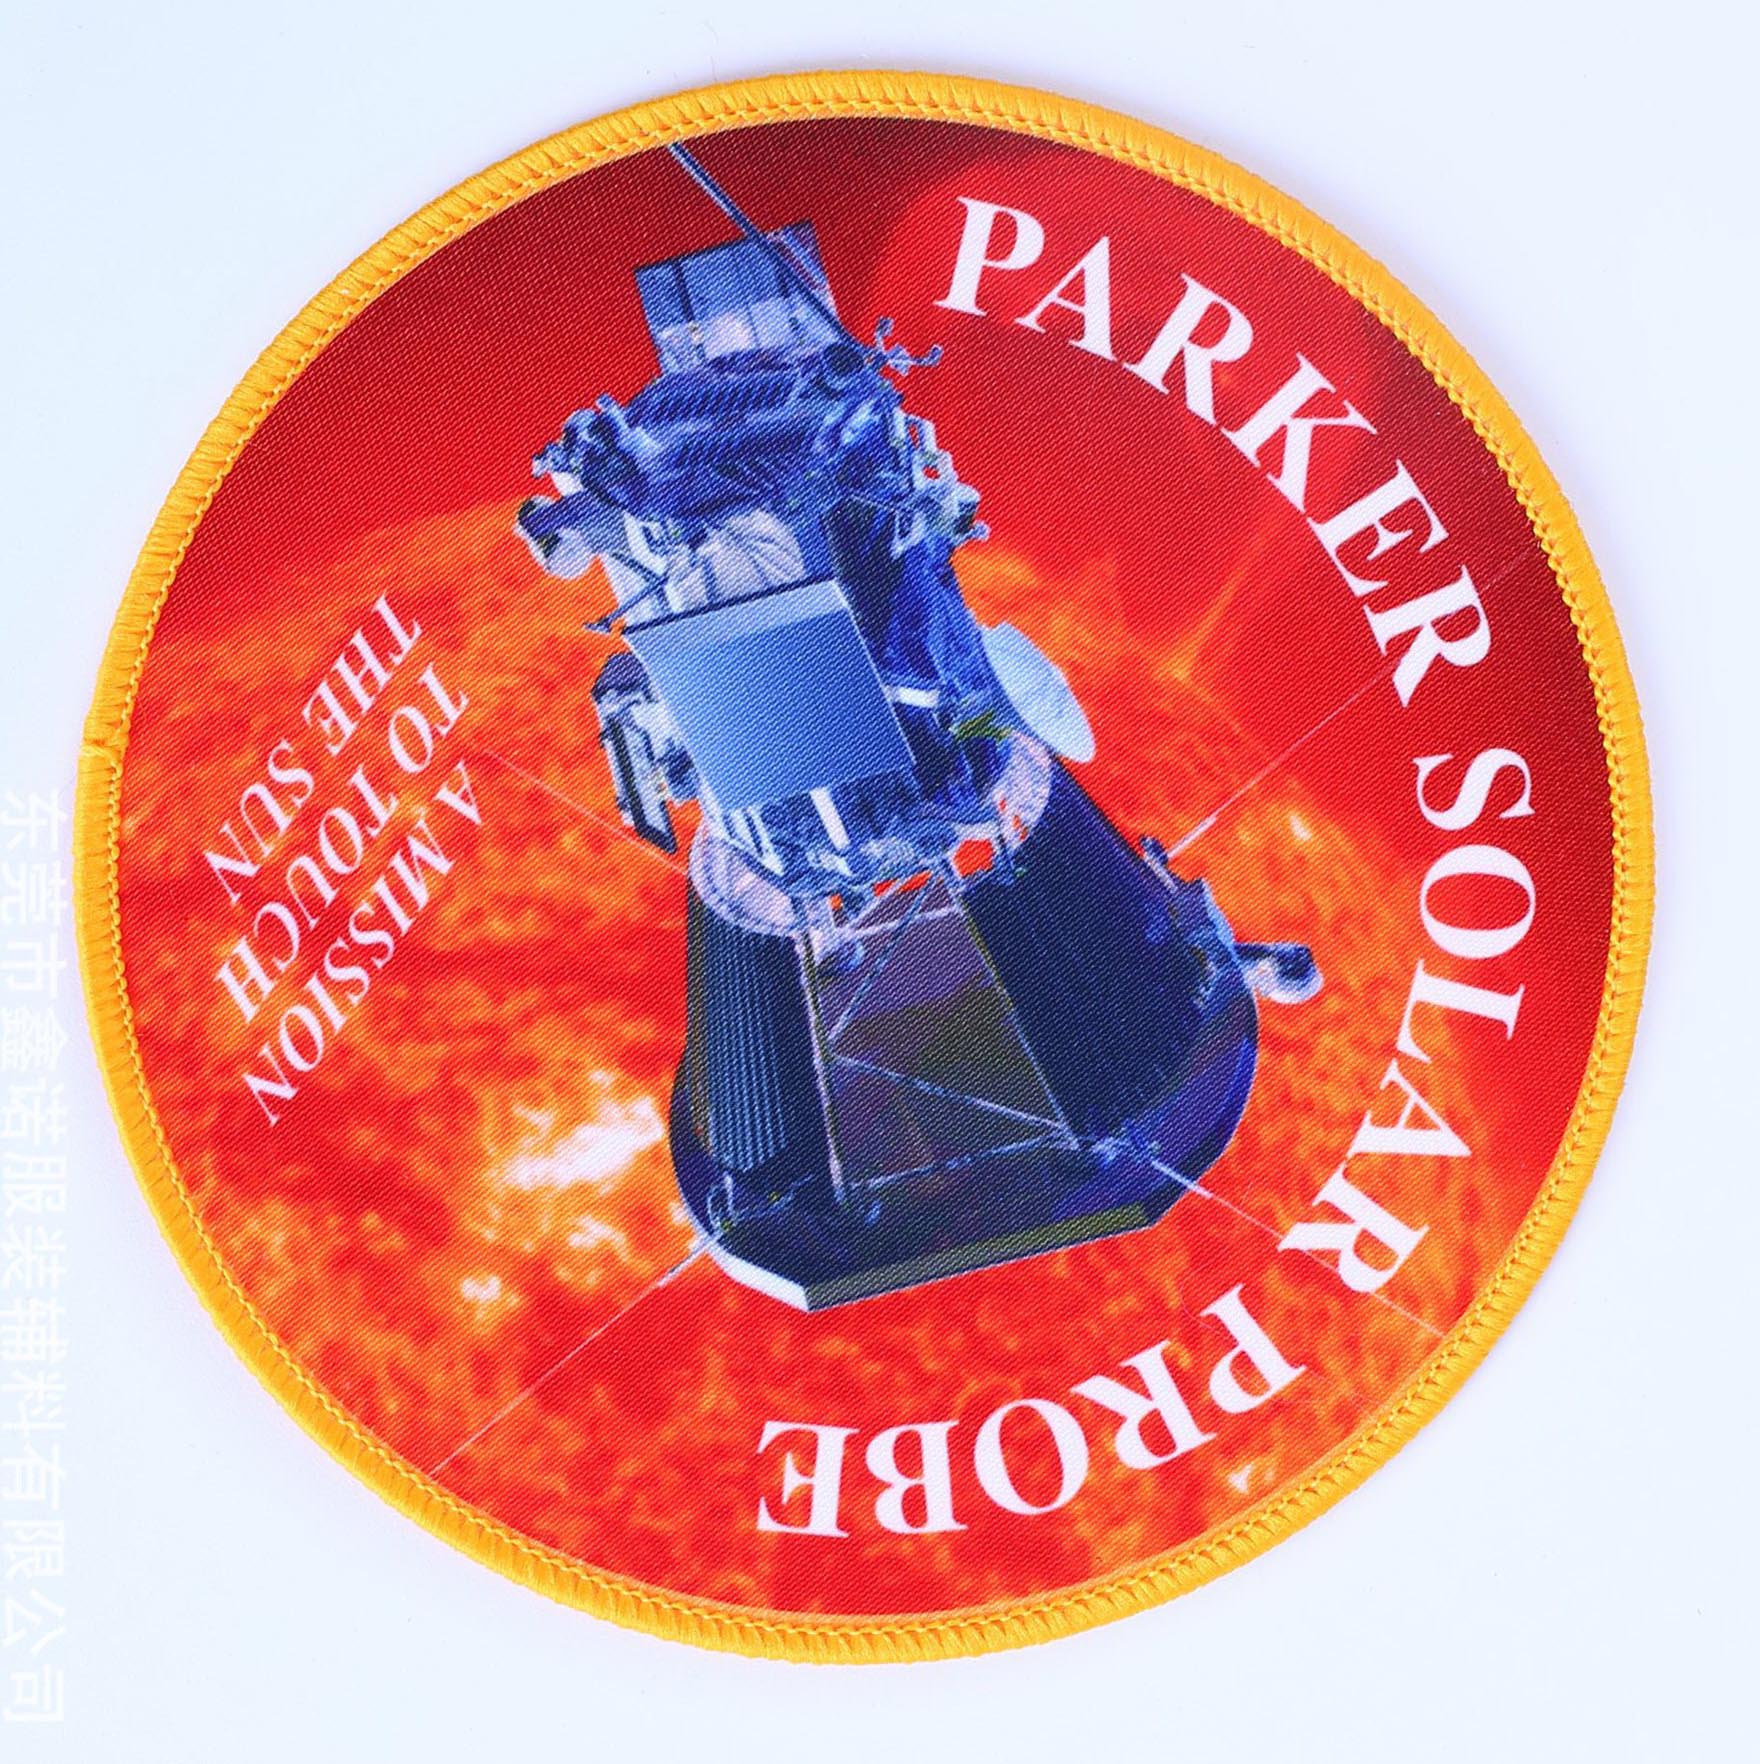 Parker solar  sporbe patch